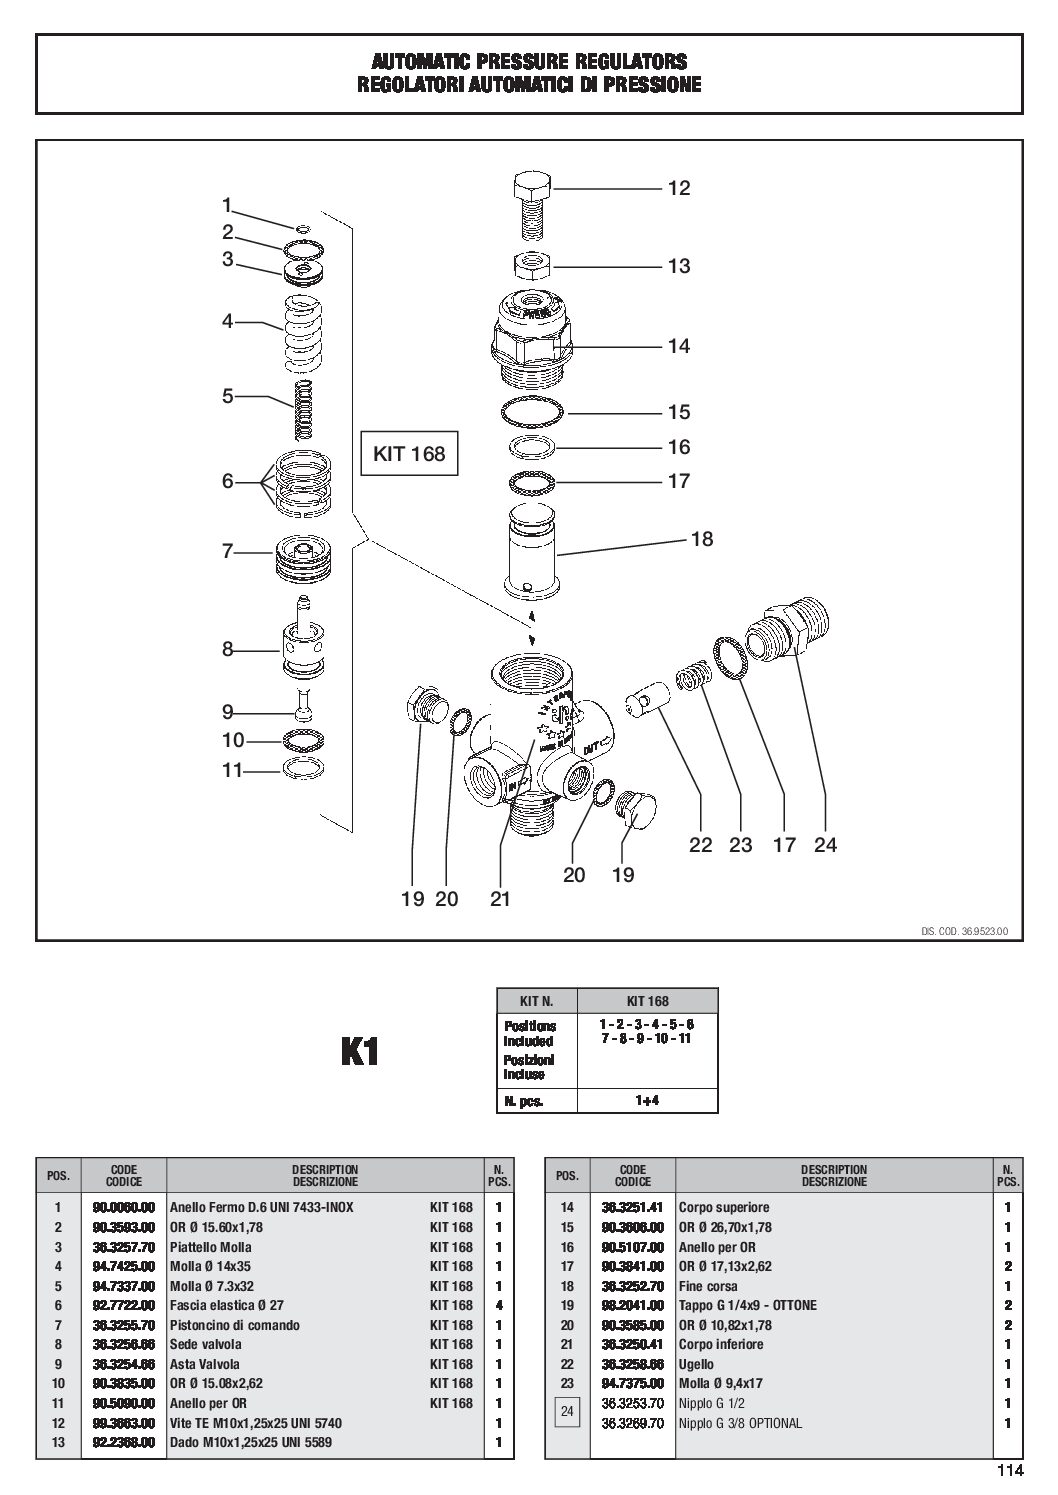 Interpump K1 Unloader Parts breakdown